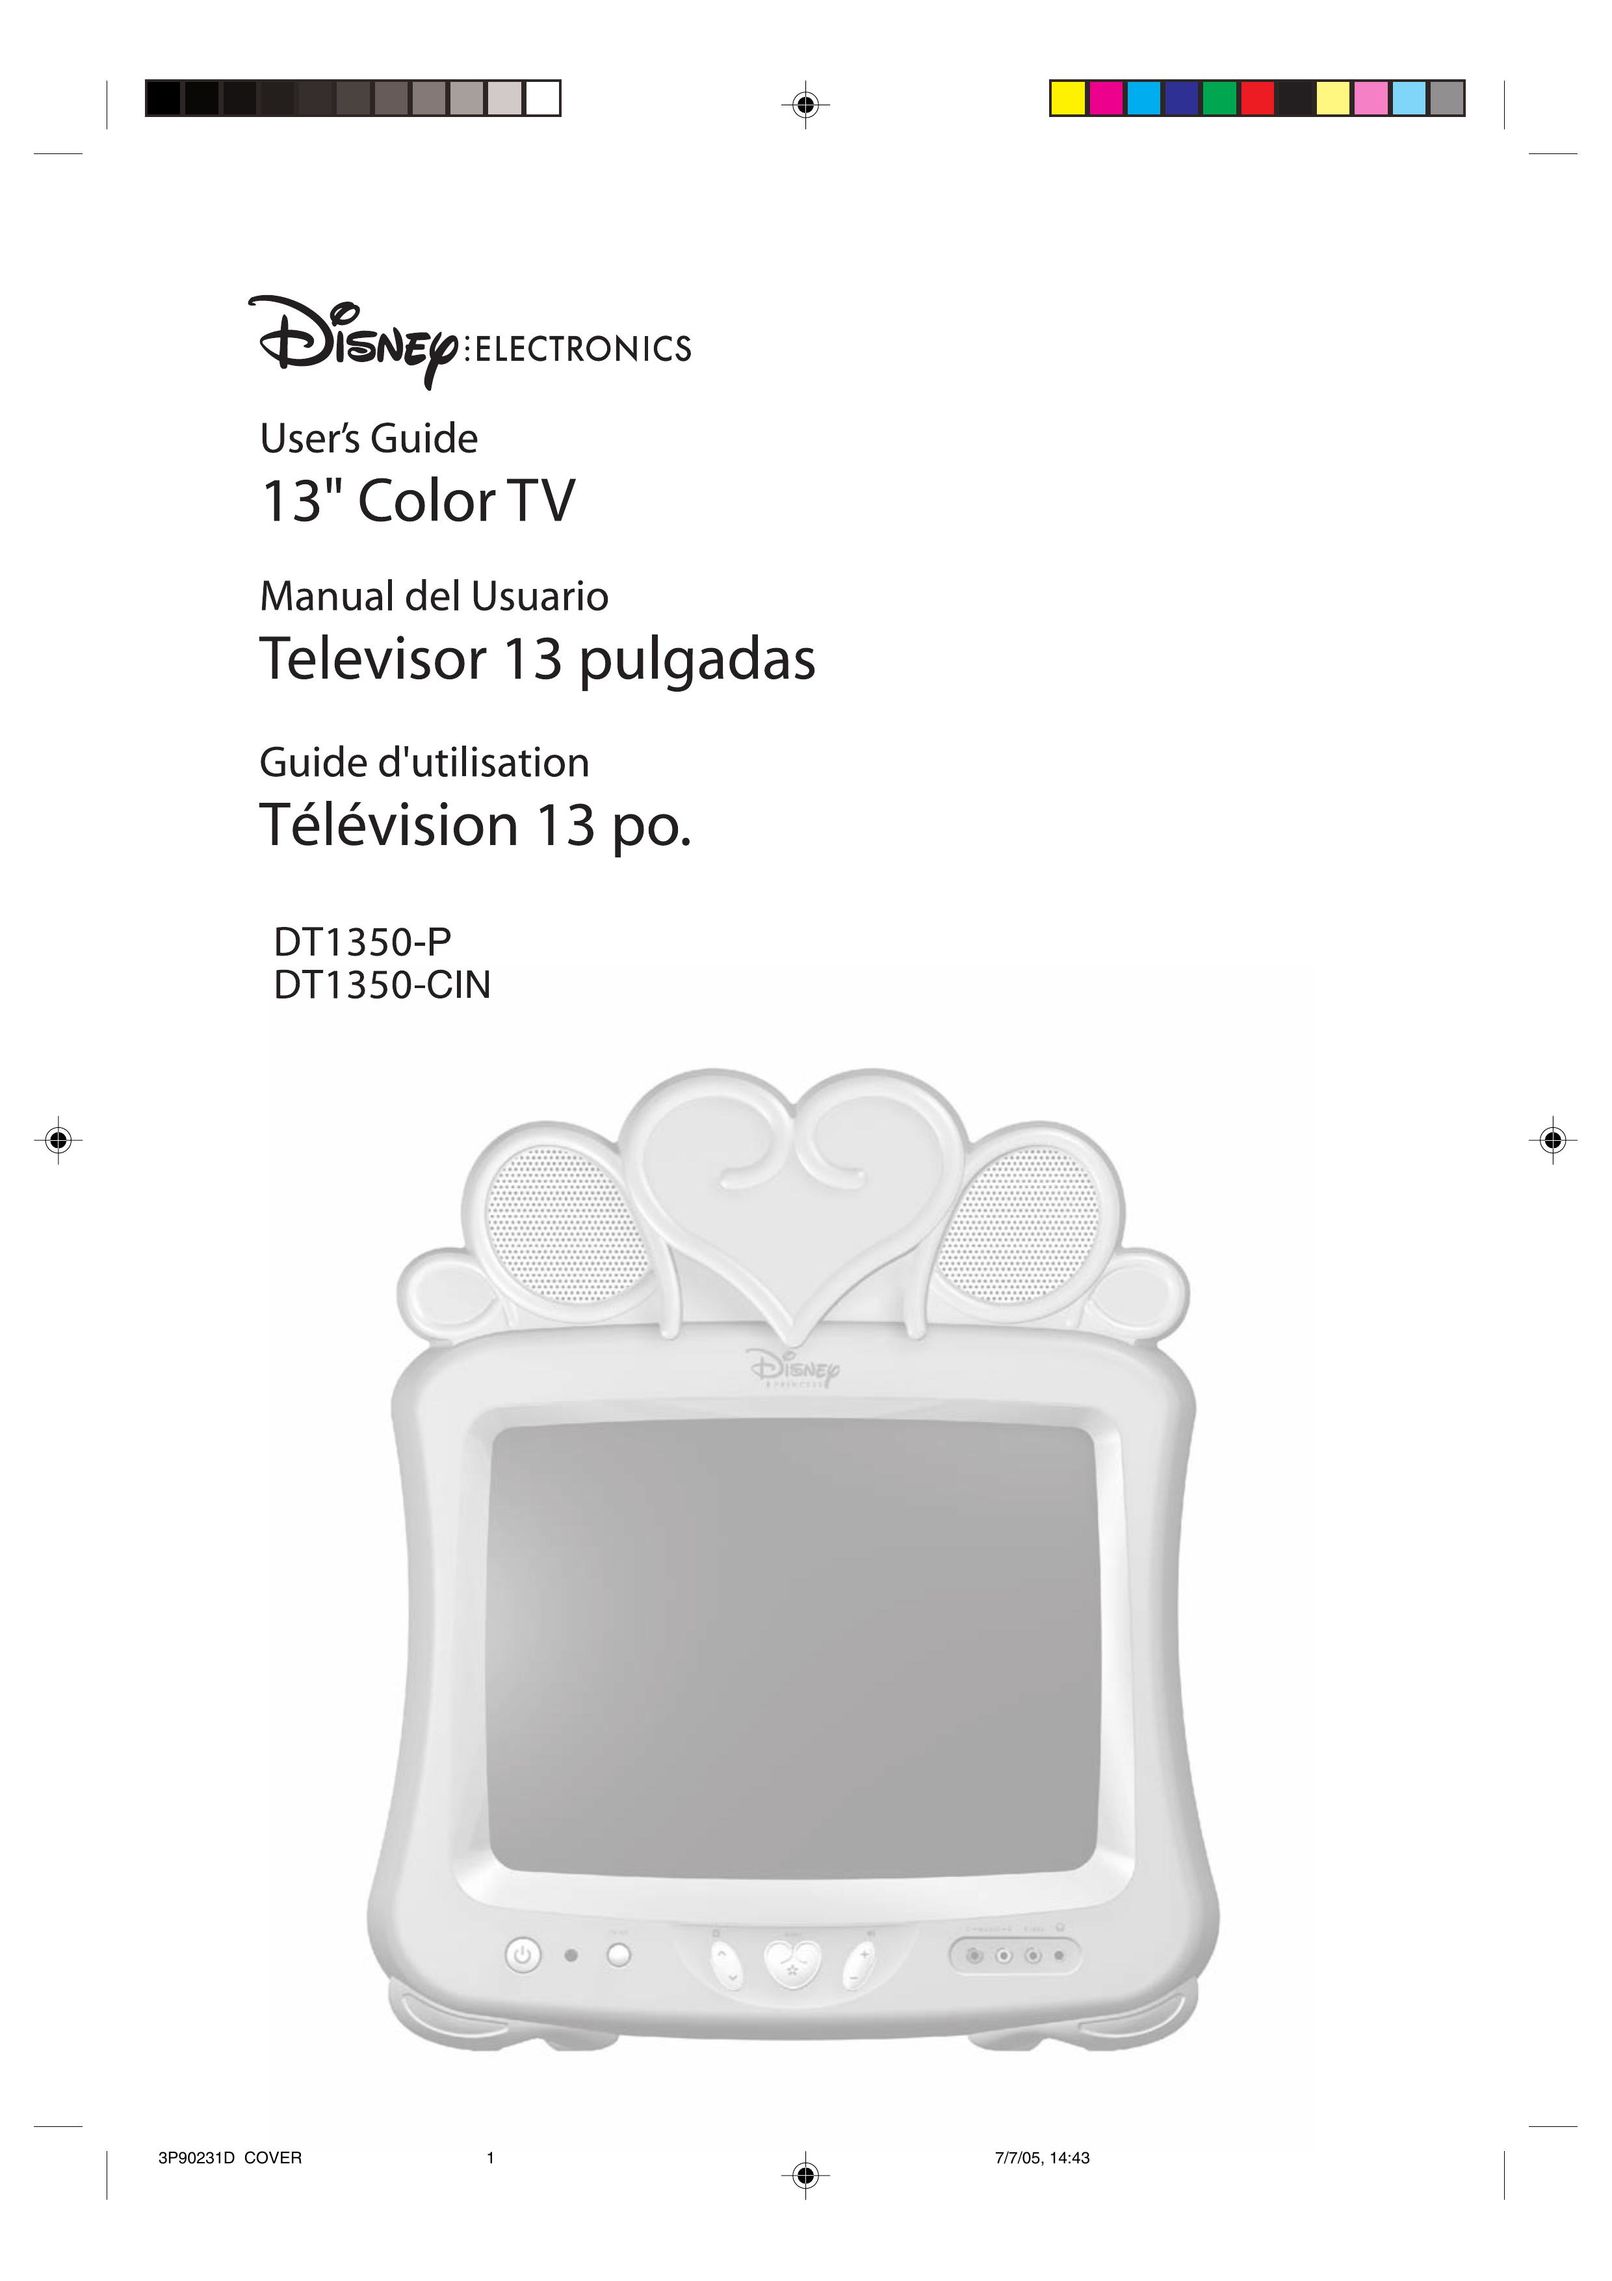 Disney 13" Color TV CRT Television User Manual